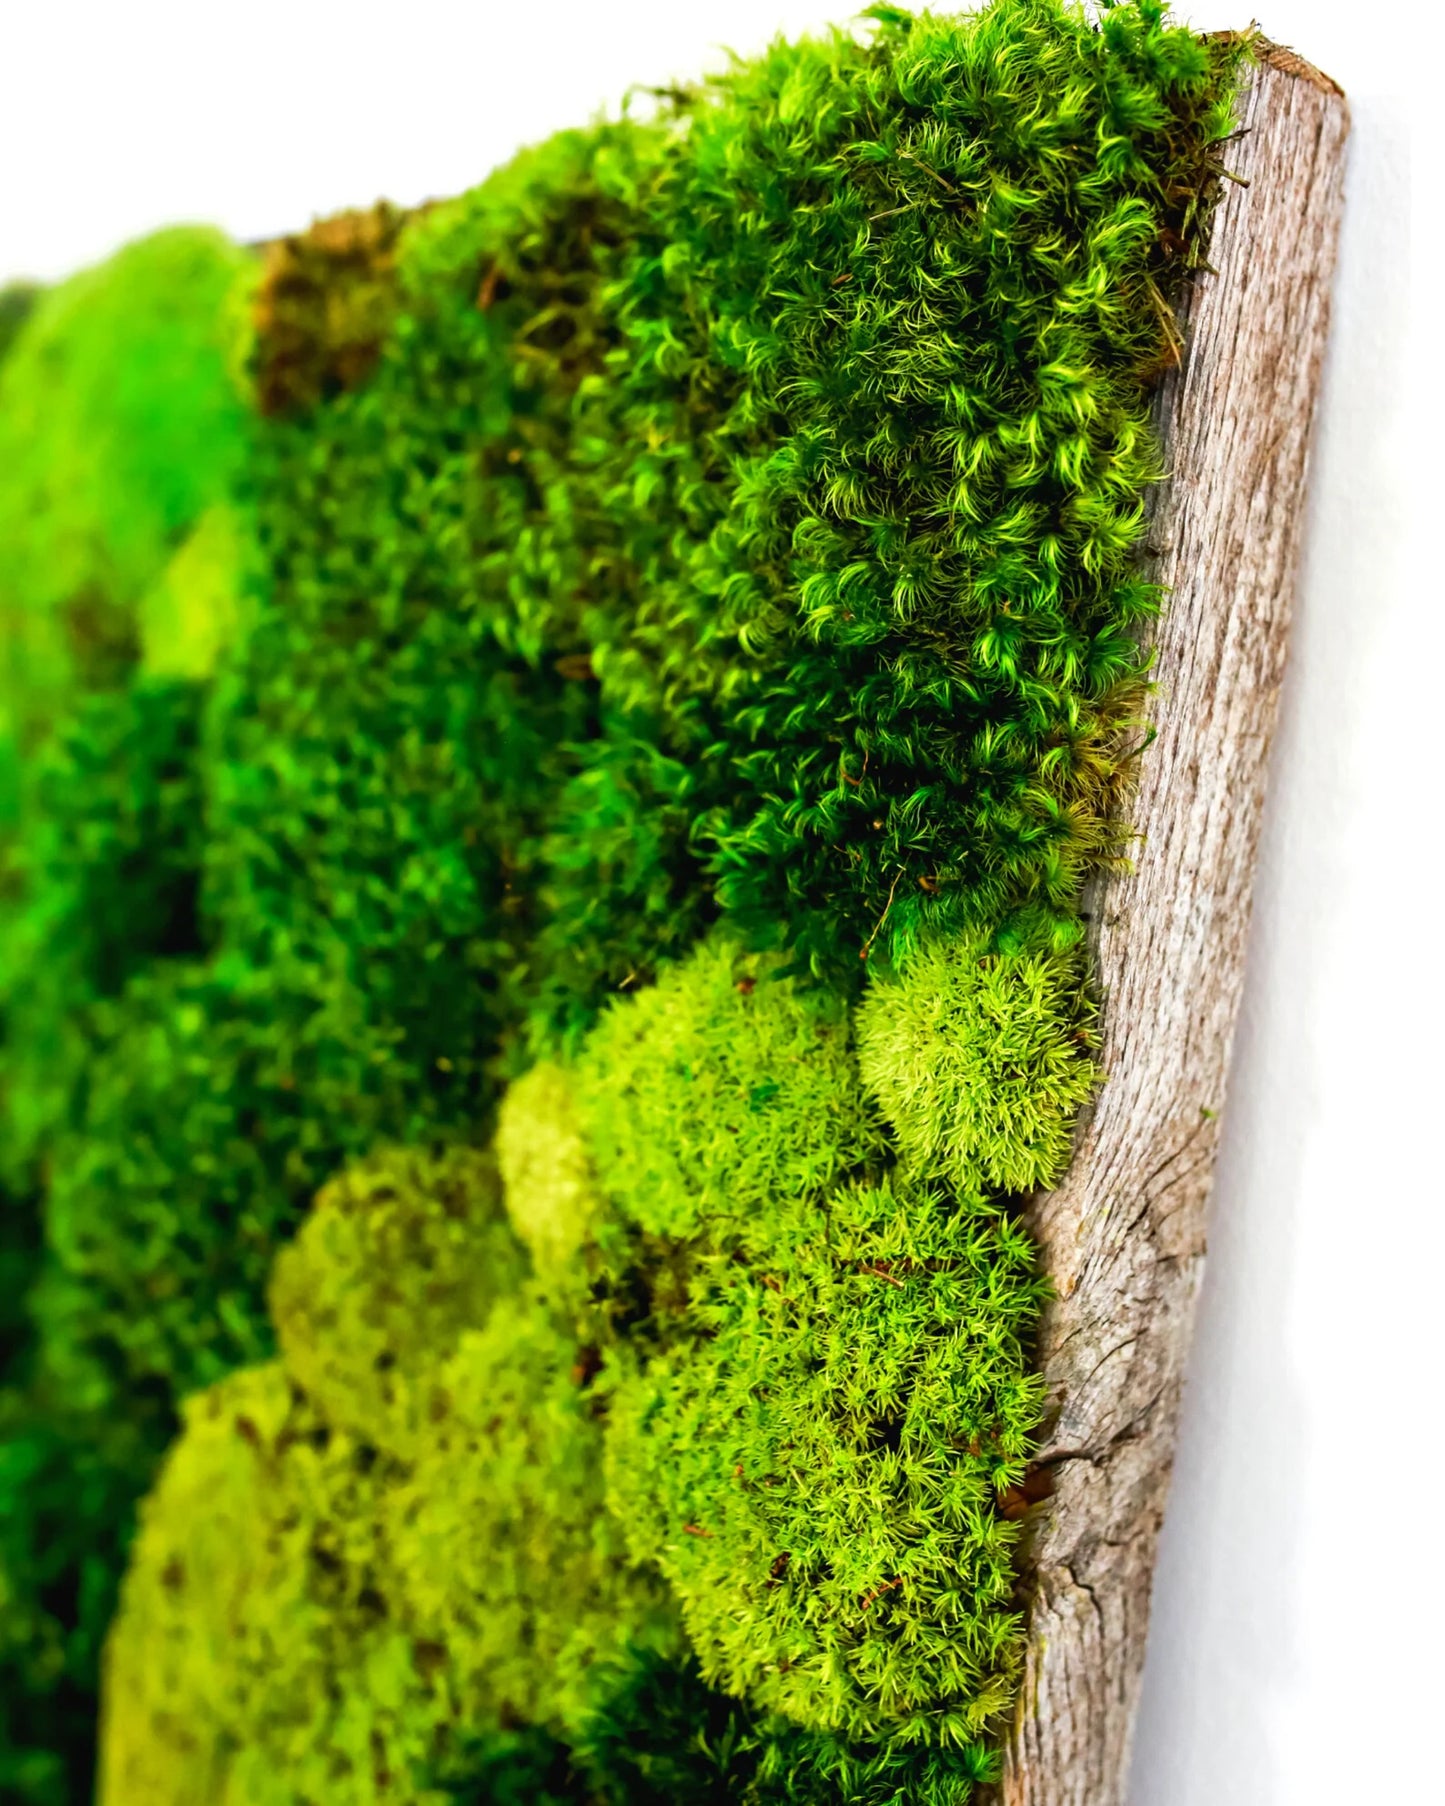 Preserved Moss Art - Chartreuse and Emerald Green Mixed Pillow Moss